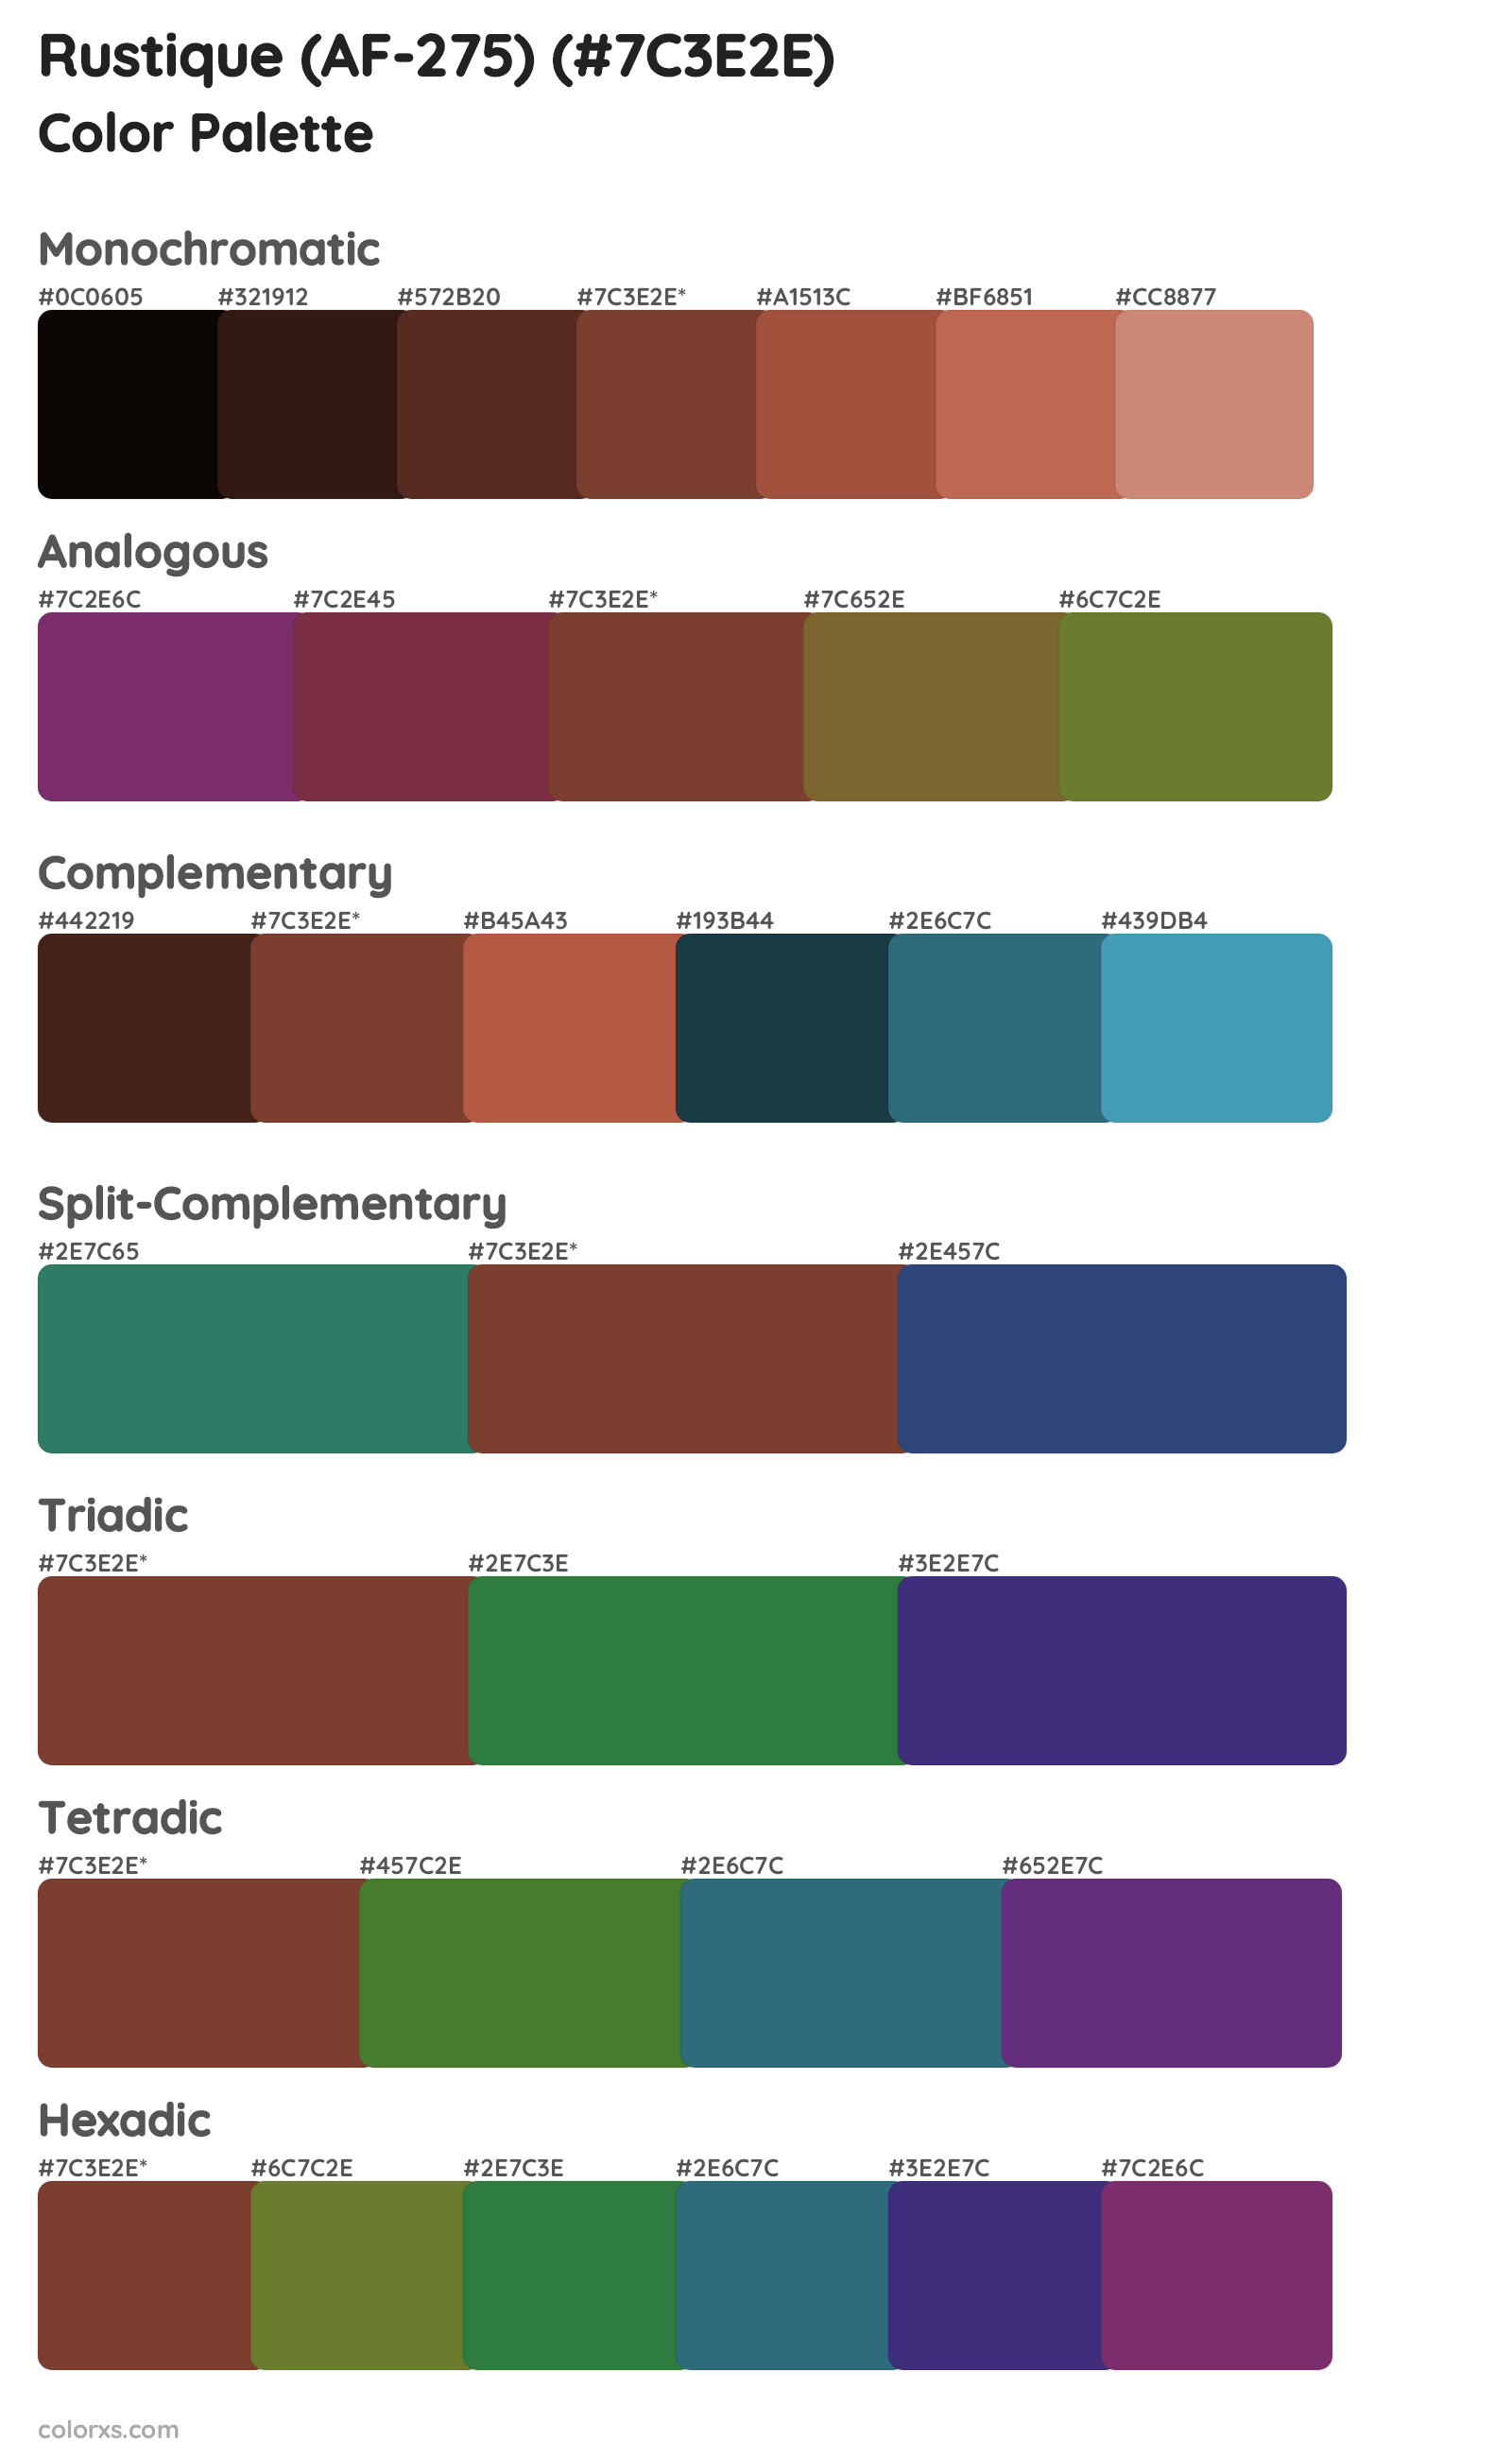 Rustique (AF-275) Color Scheme Palettes